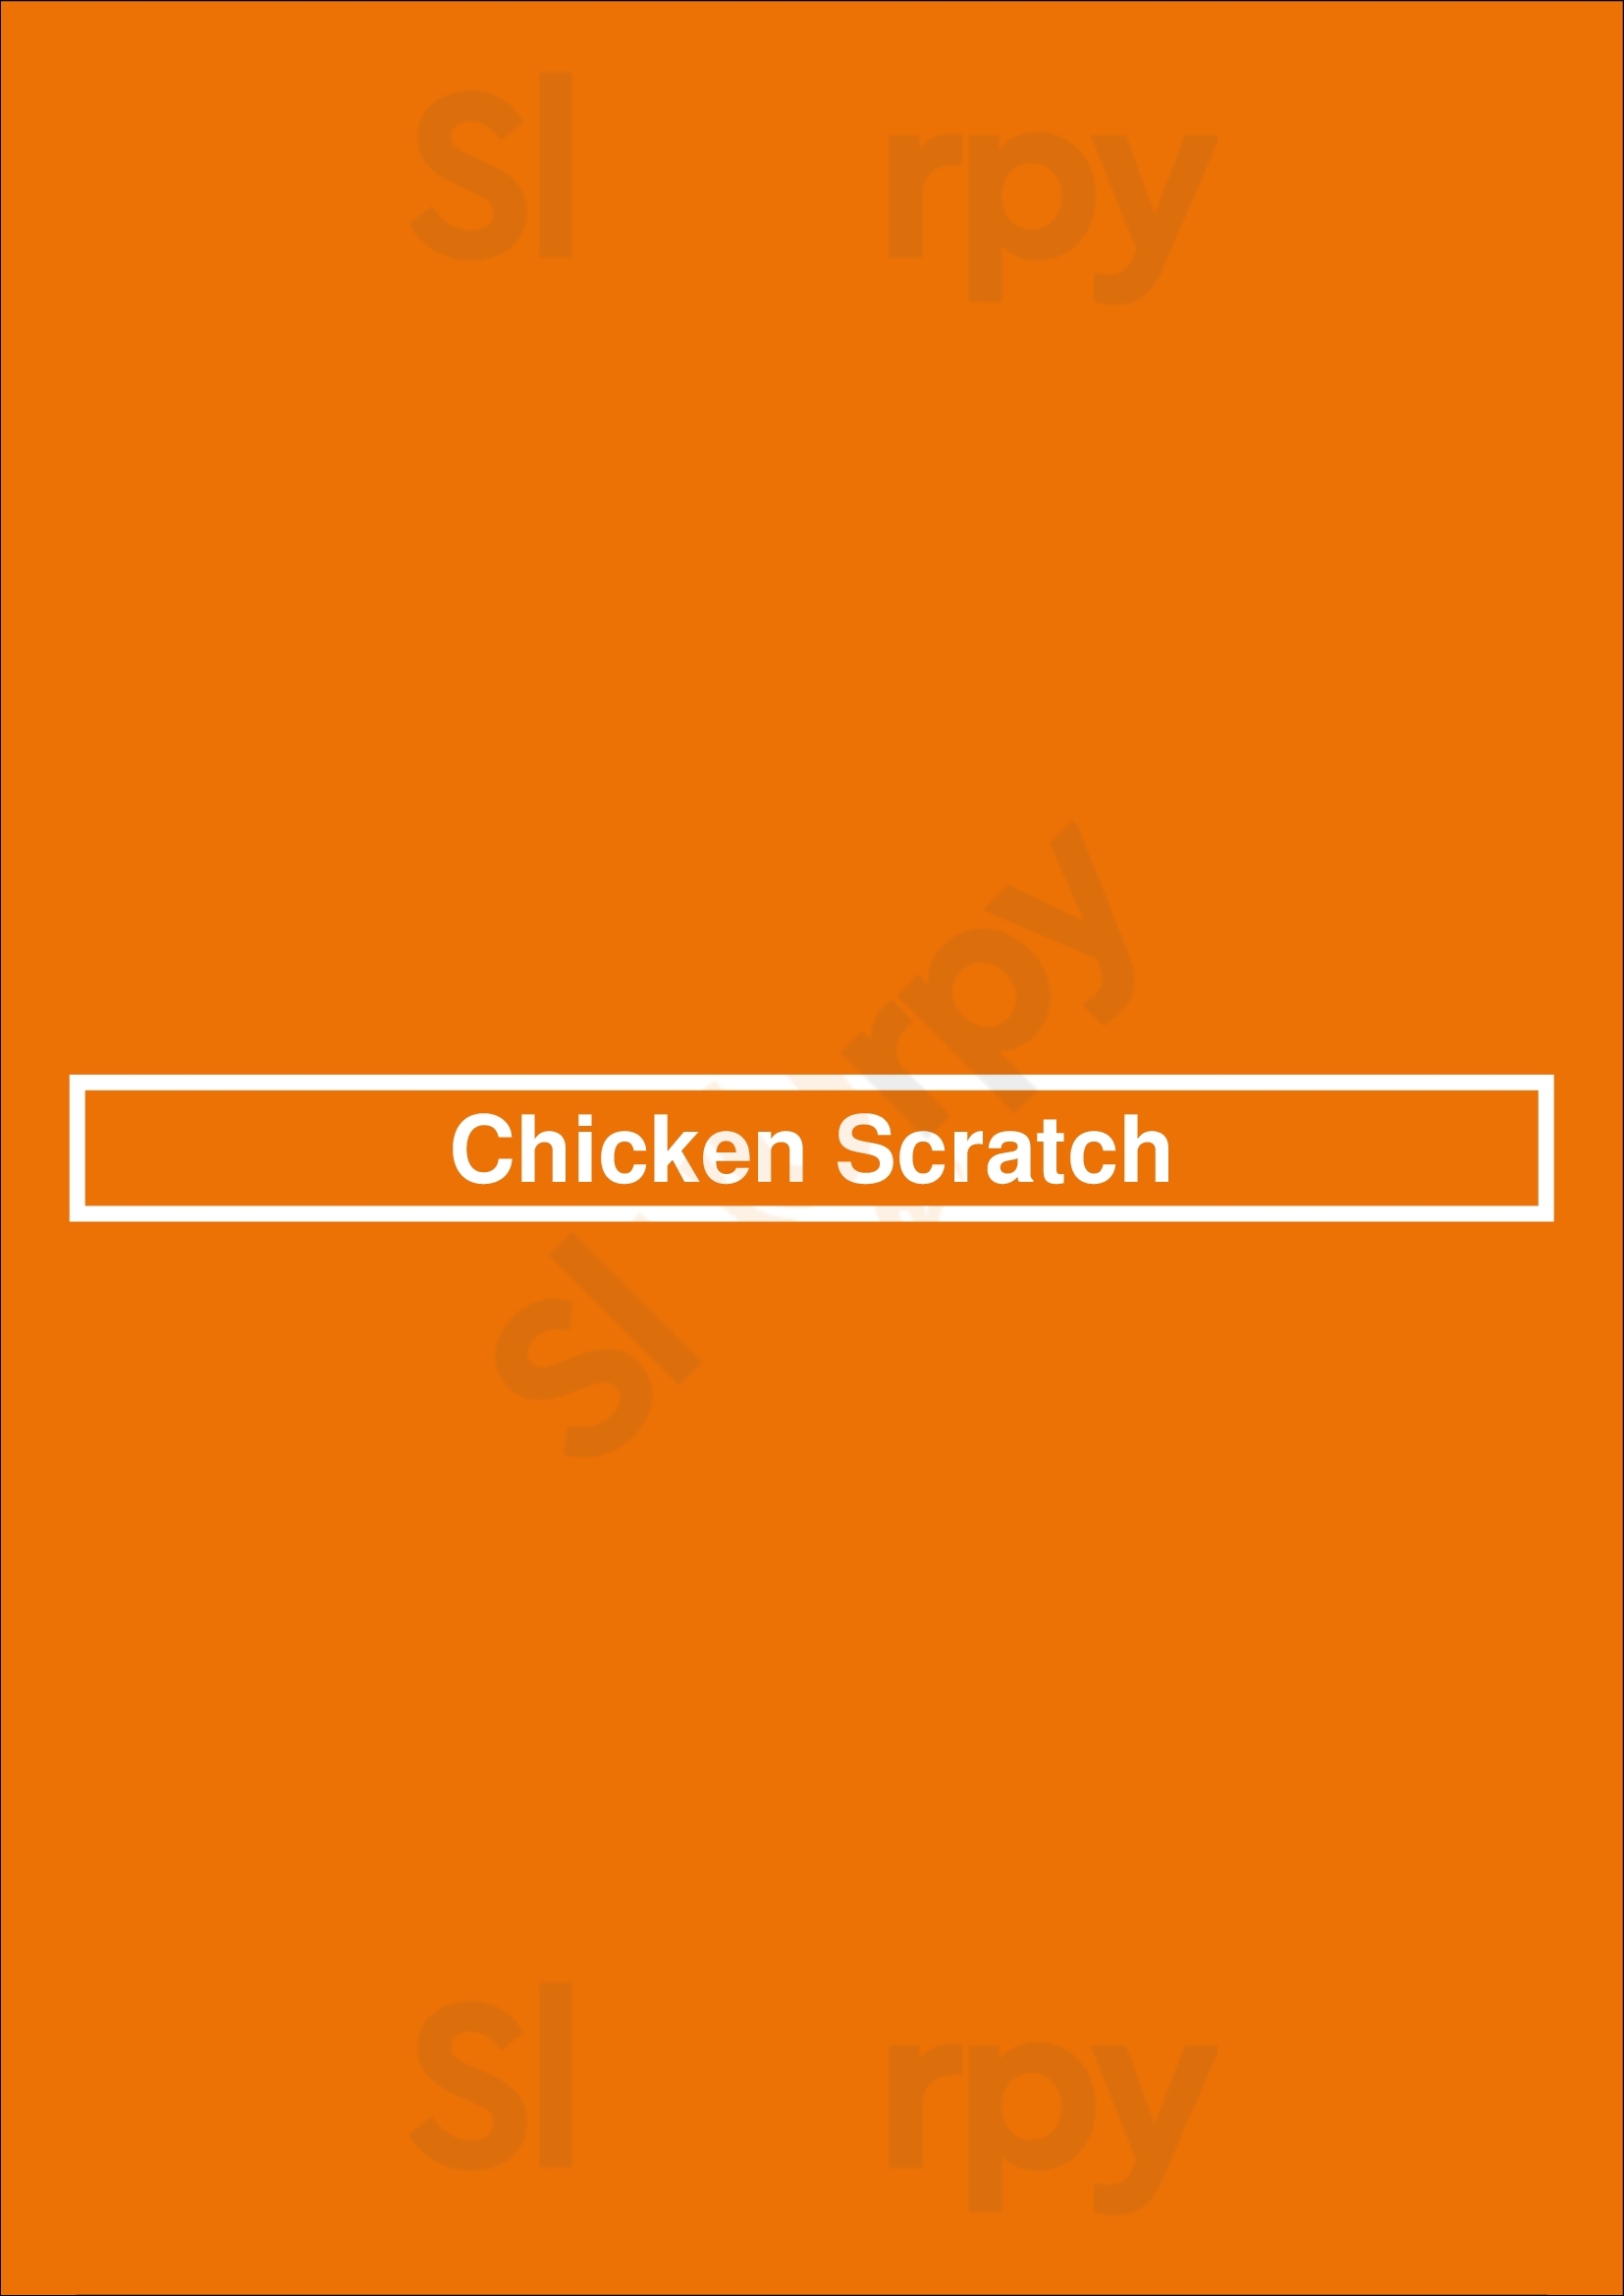 Chicken Scratch Dallas Menu - 1